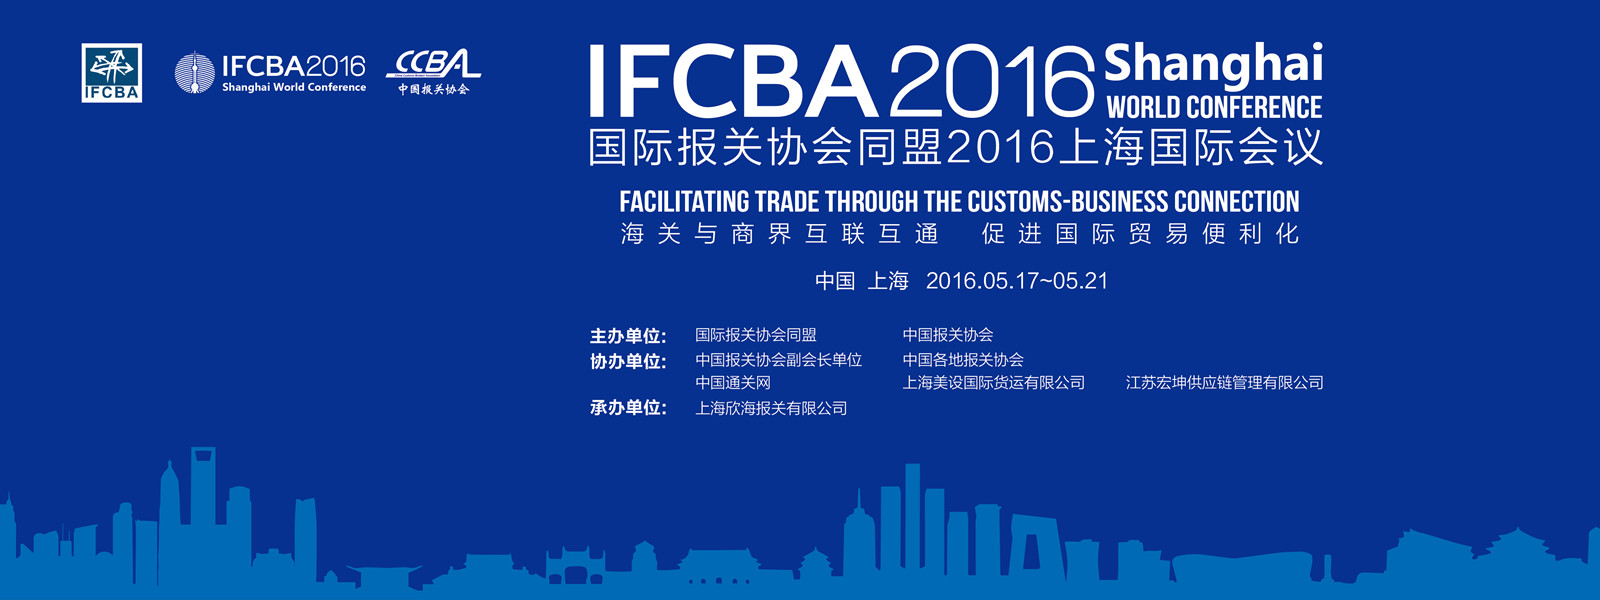 2016IFCBA花絮34—IFCBA2016江苏宏坤供应链管理有限公司董事长兼总经理发言